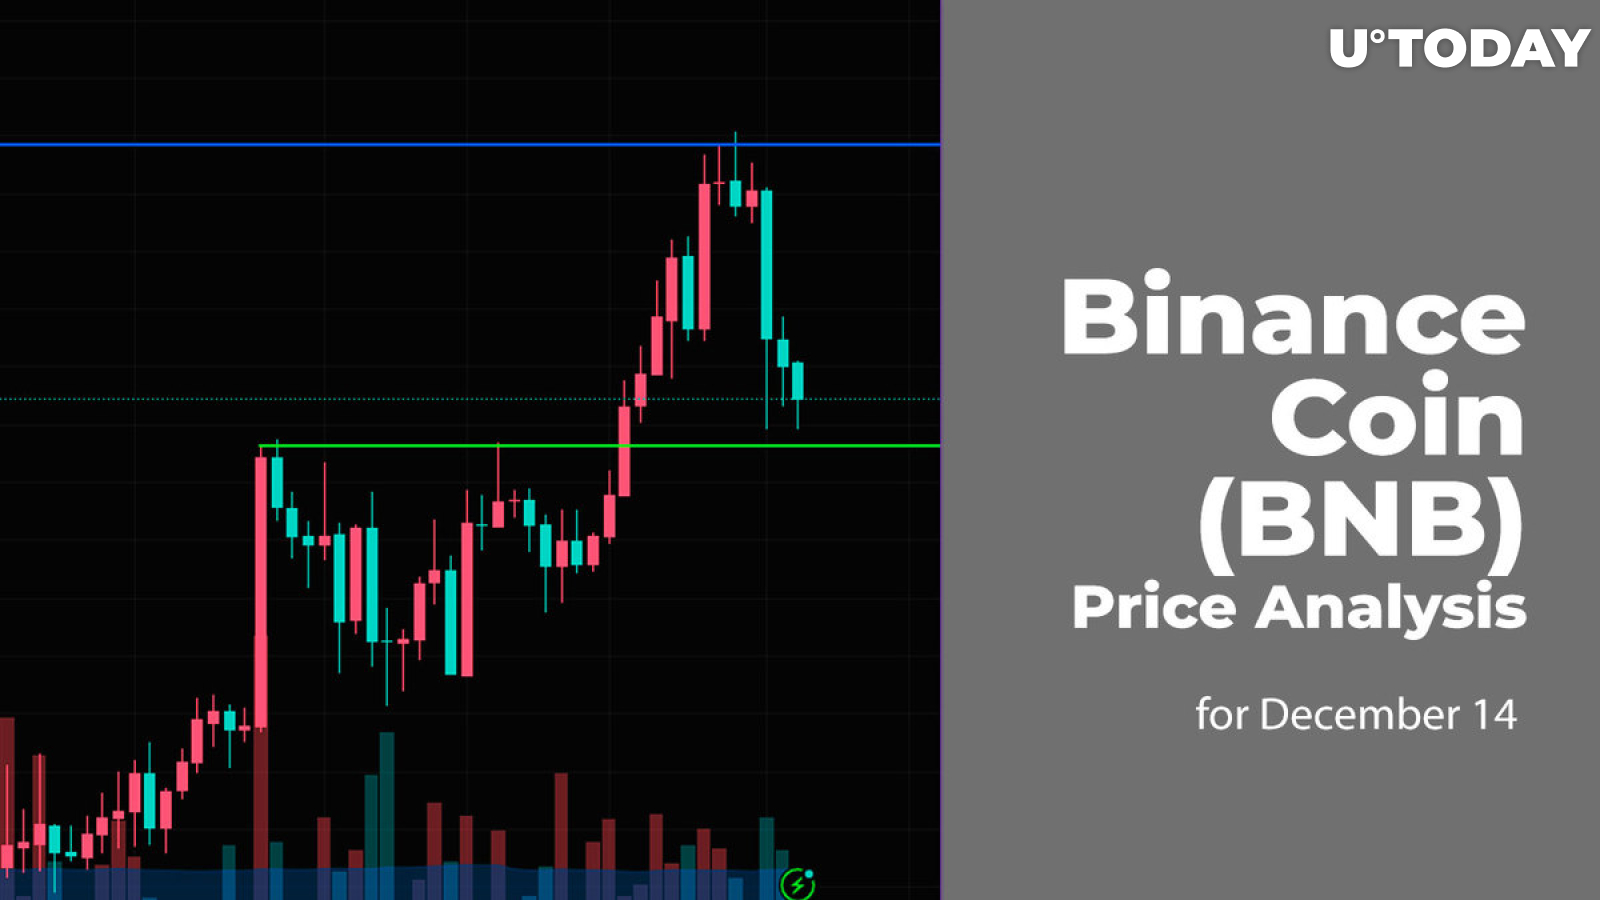 Binance Coin (BNB) Price Analysis for December 14